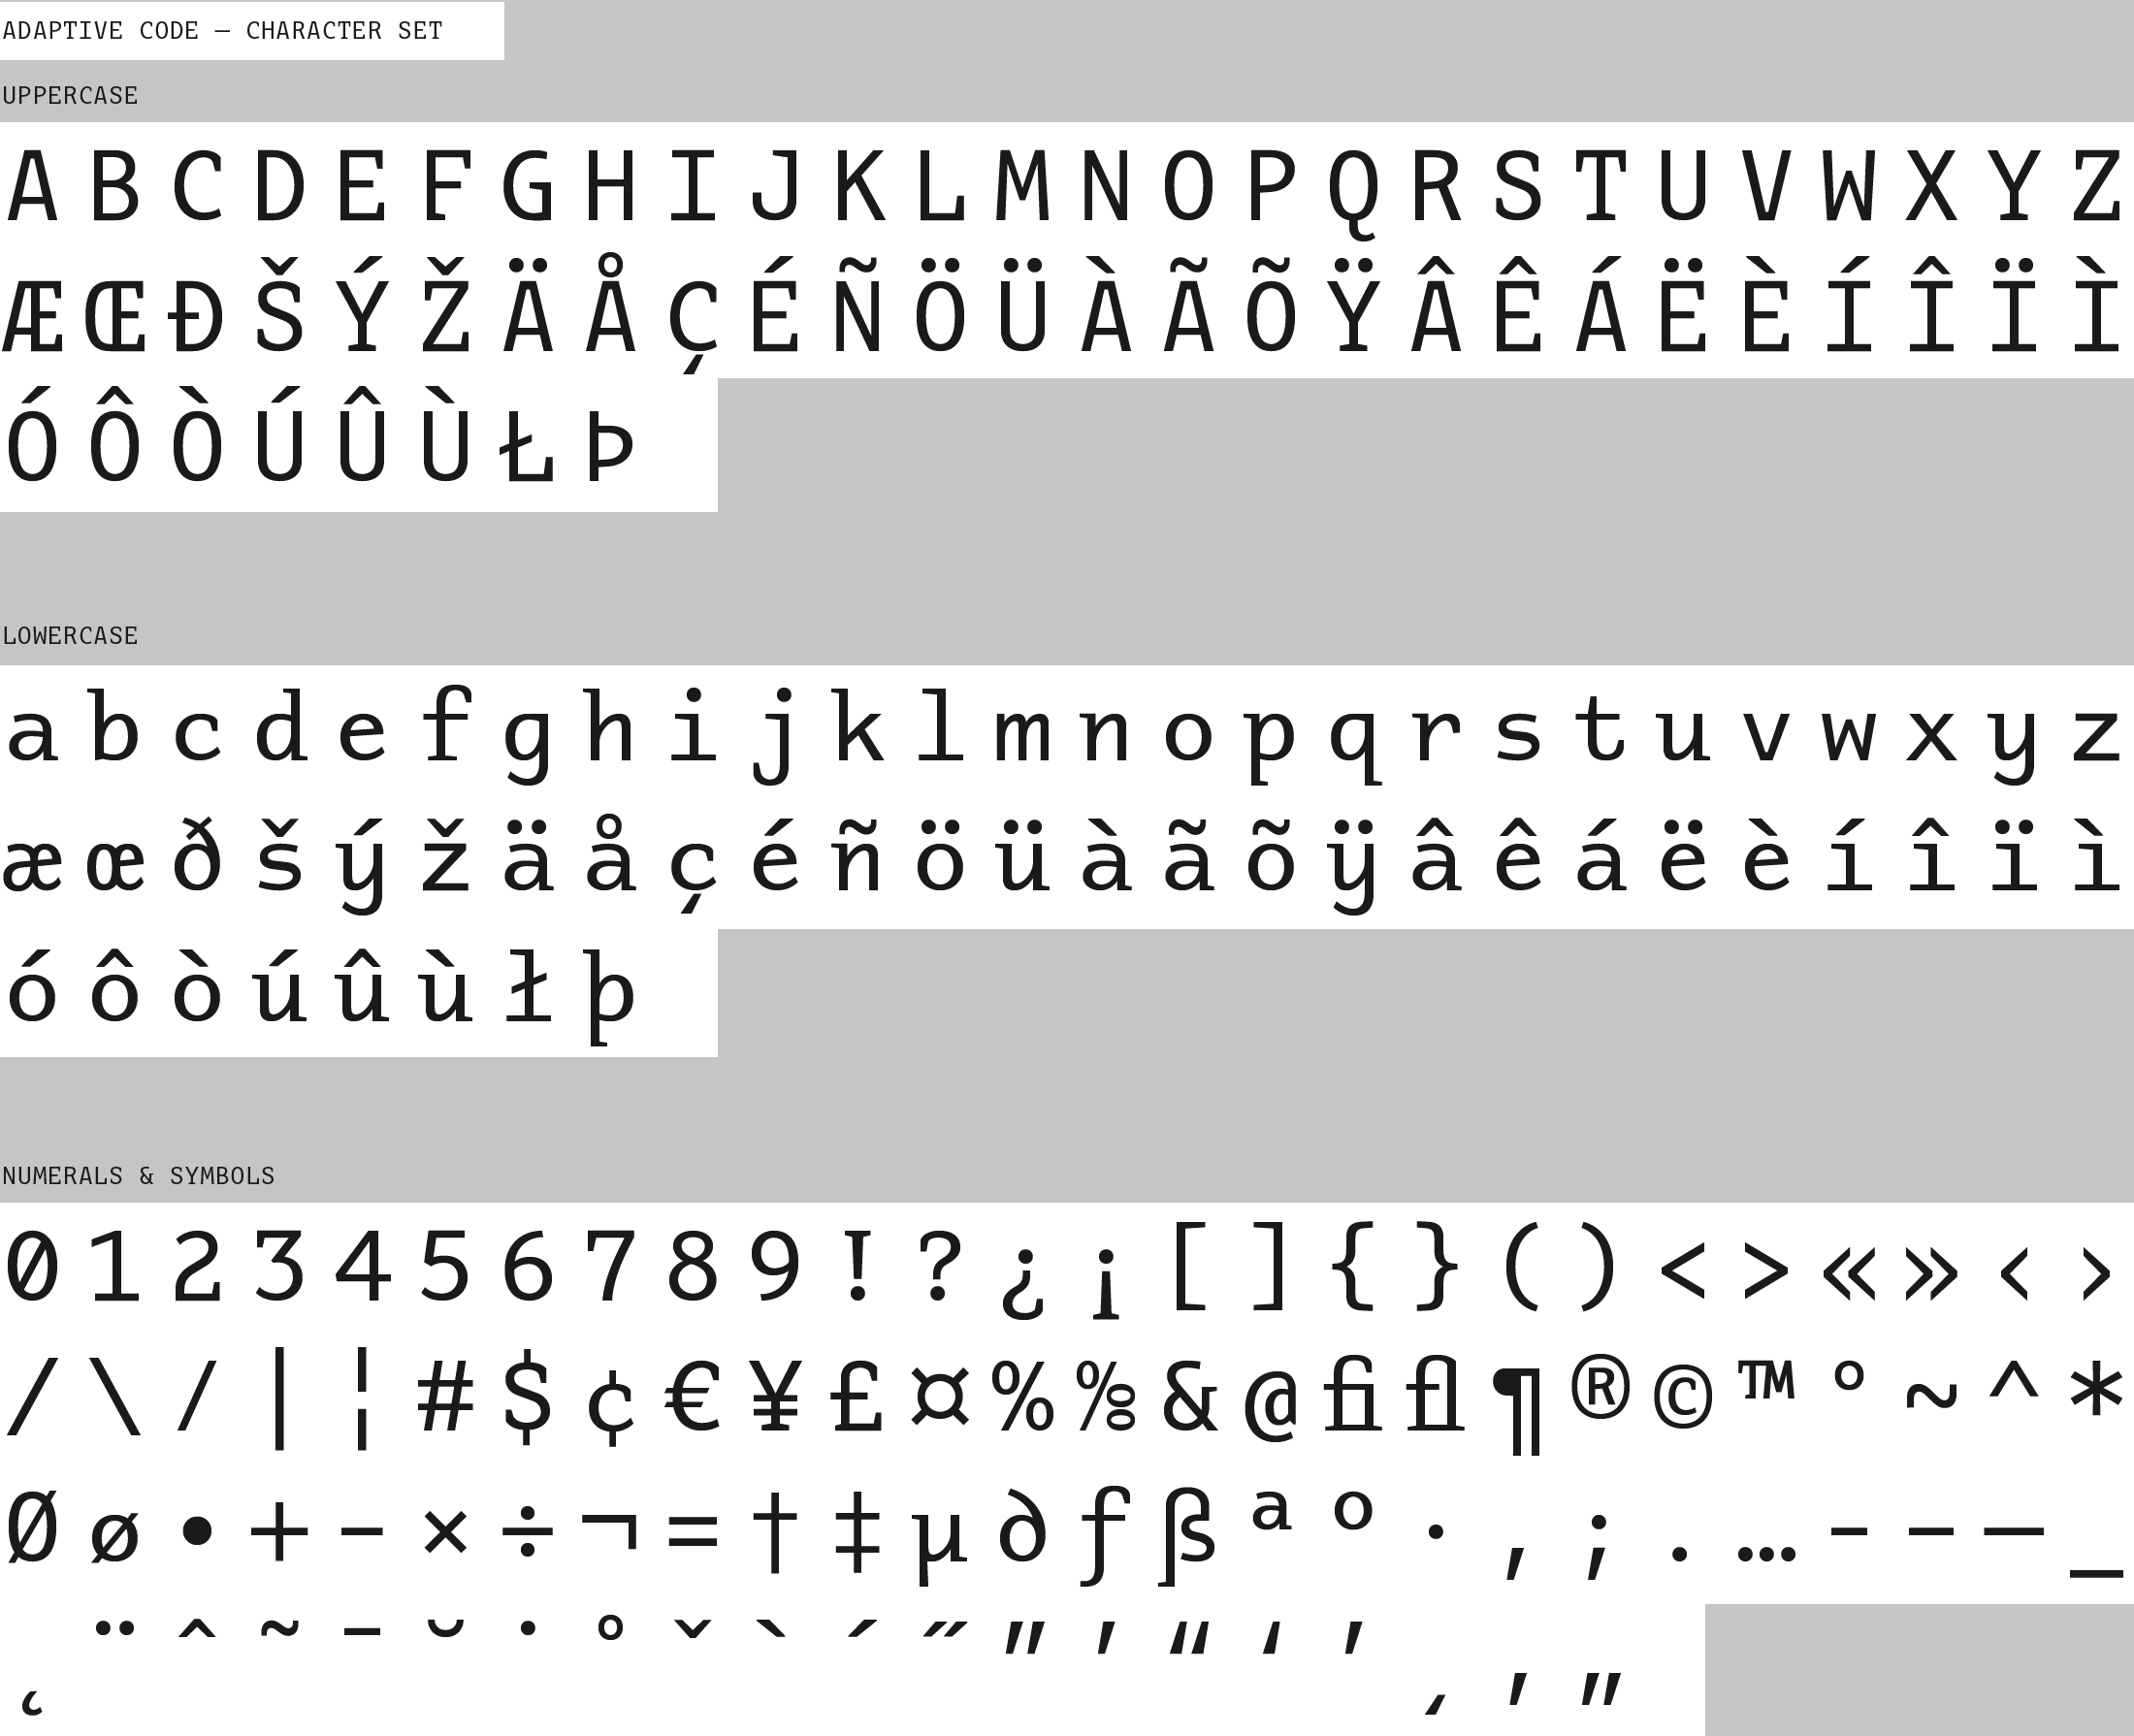 Adaptive Font Code Character Set